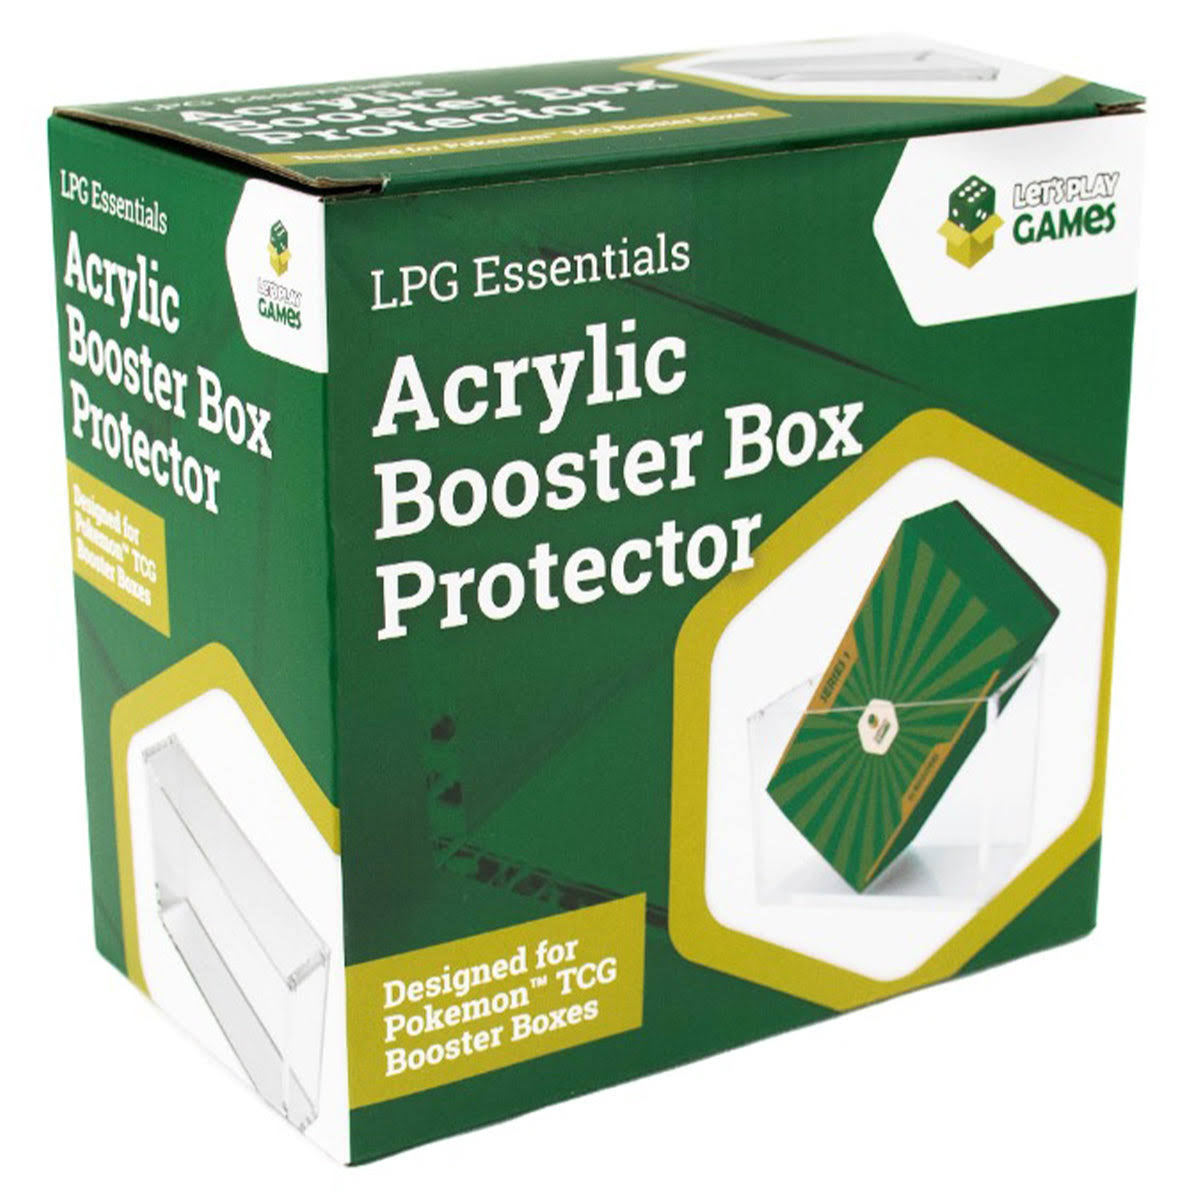 LPG Acrylic Booster Box Protector - Pokemon Booster Box Size